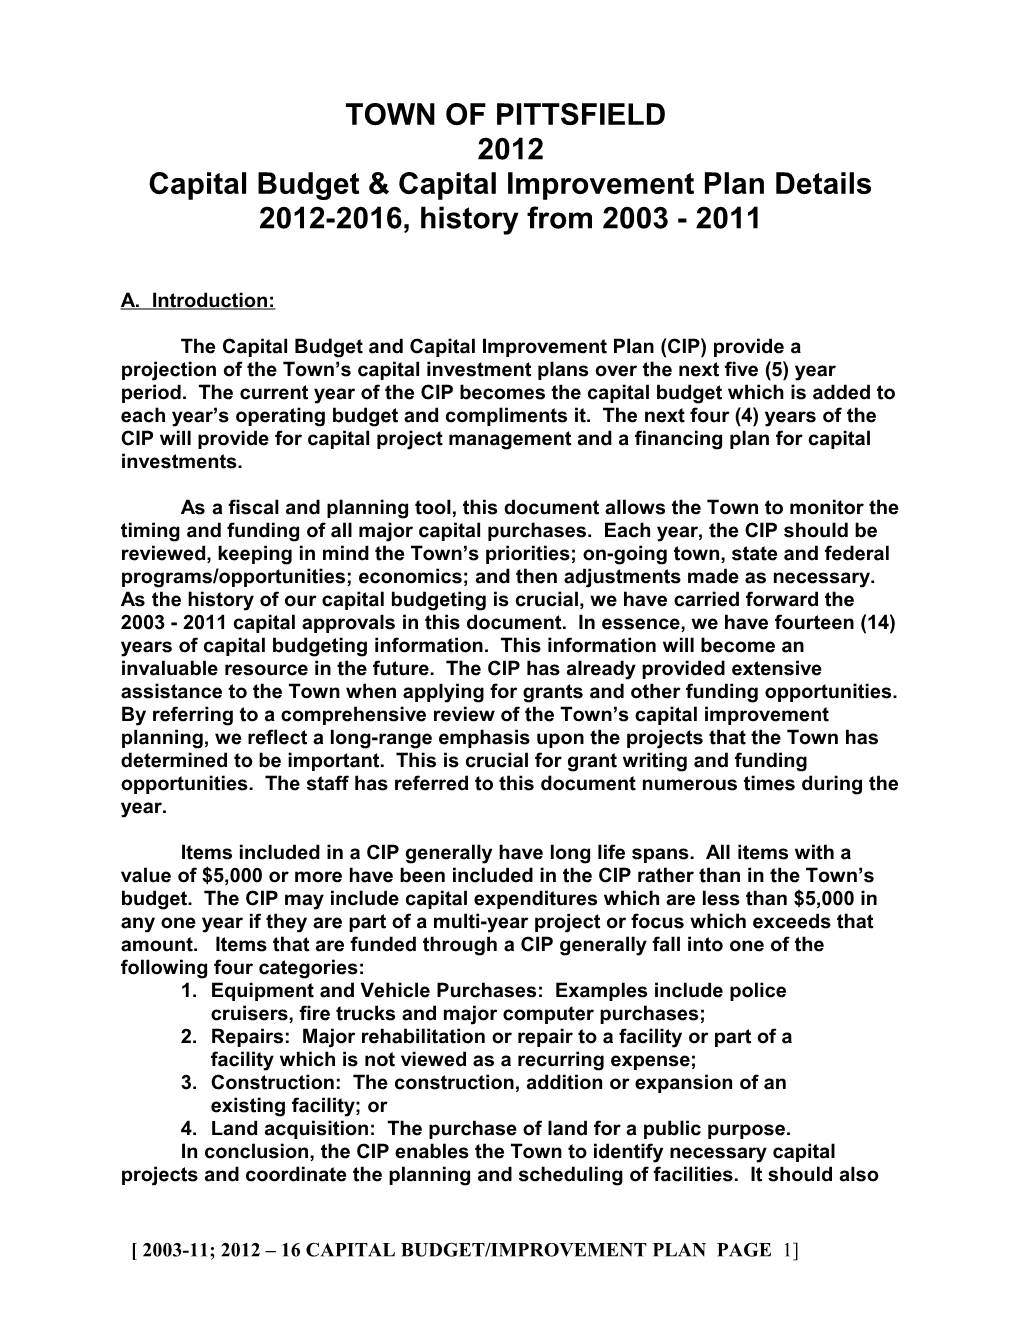 Capital Budget & Capital Improvement Plan Details